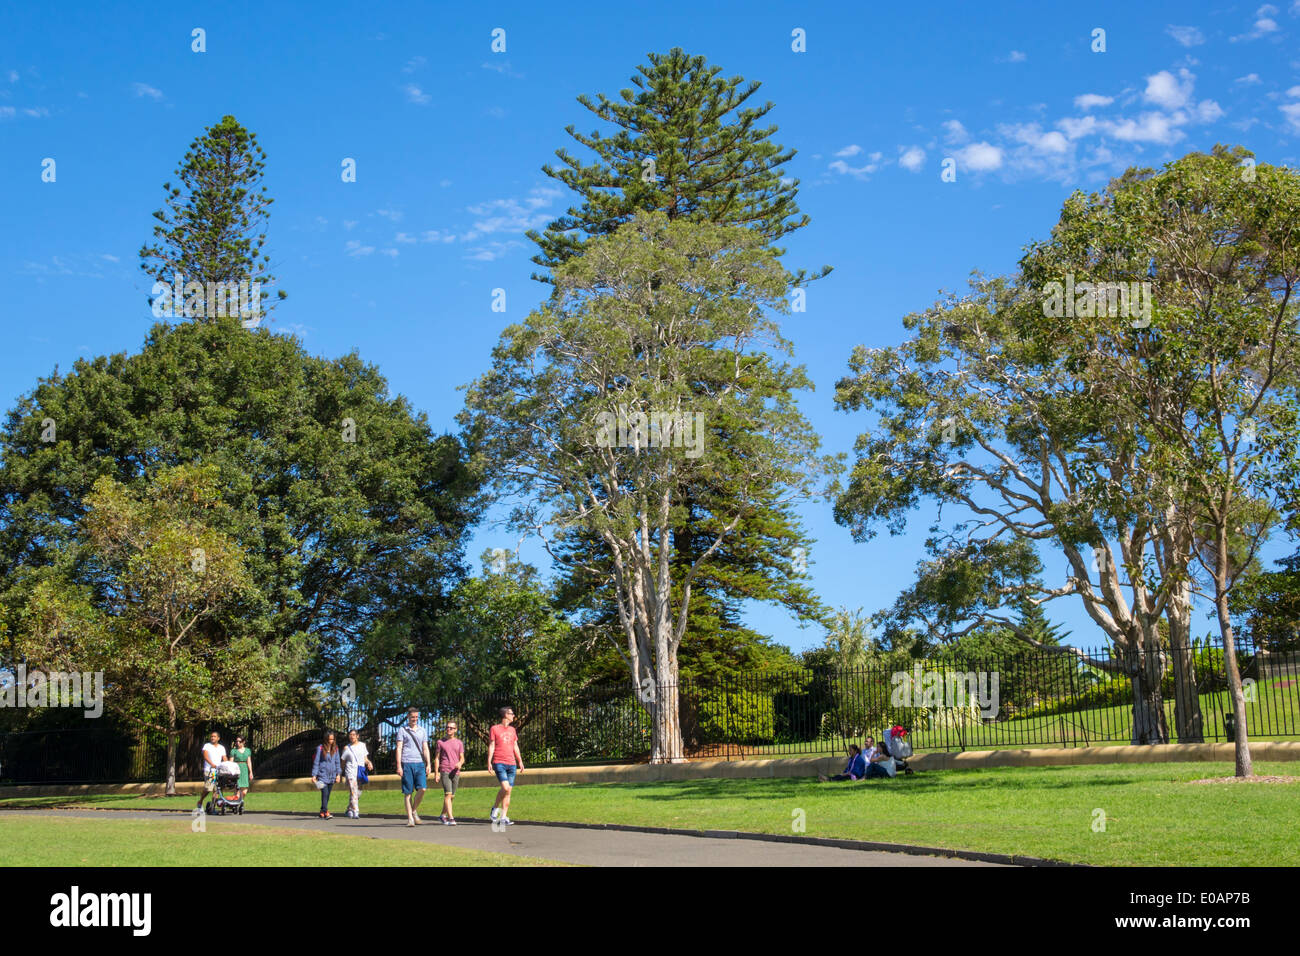 Sydney Australia,Royal Botanic Gardens,hombre hombres,mujer mujer mujeres,familia padres padres hijos niños,caminar,camino,árboles,parque,AU1403090 Foto de stock